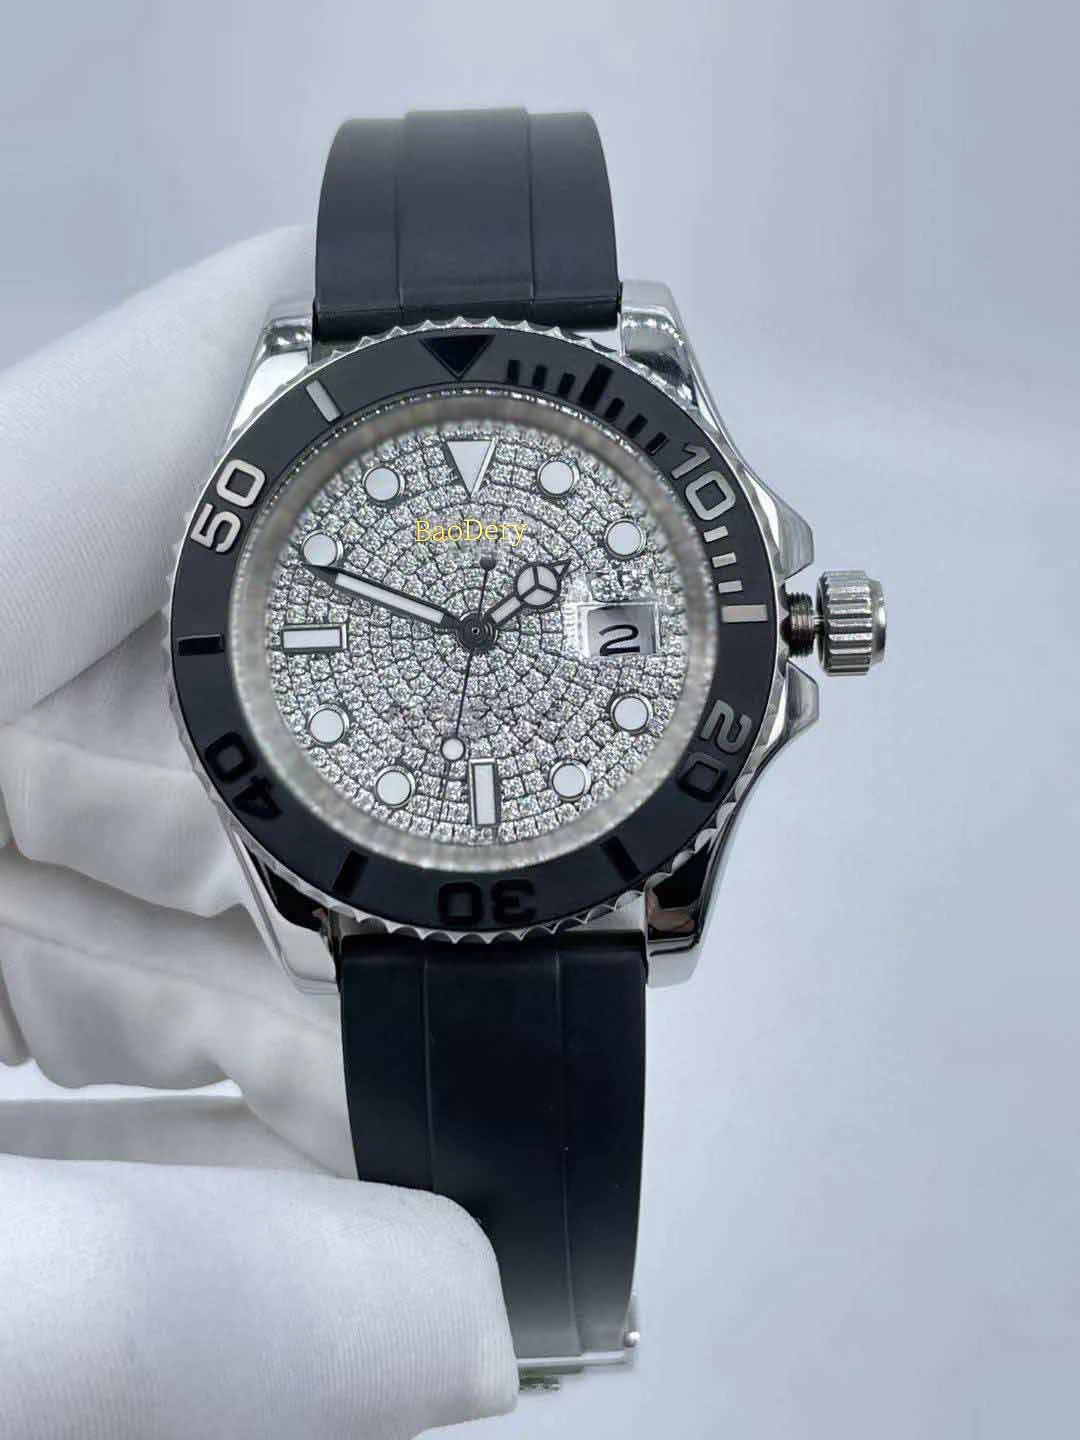 

40mmMen's Digital Watches - Thin Watch with Folding Buckle, Waterproof